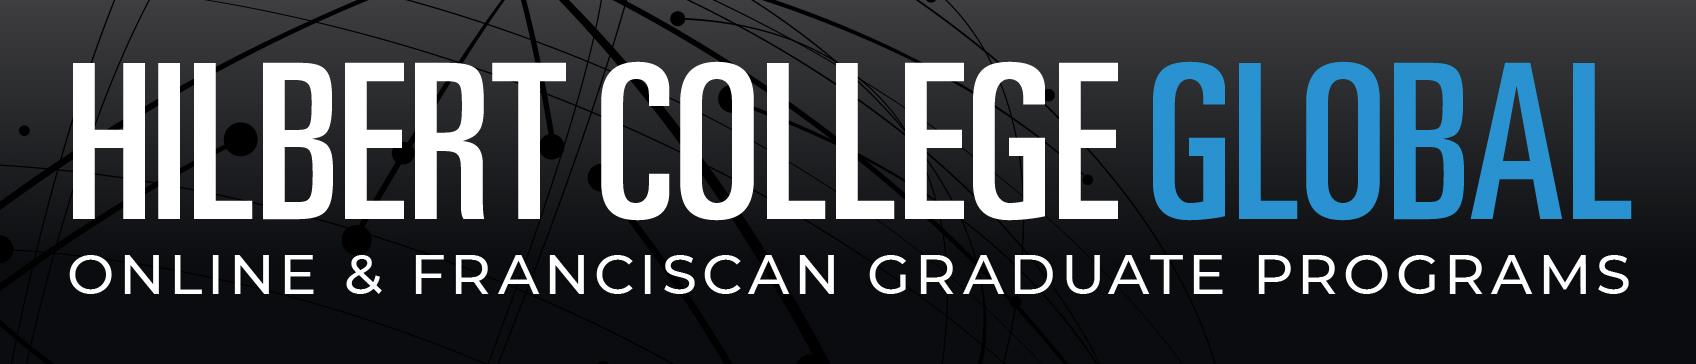 Hilbert College Global - Online & Franciscan | Graduate Programs